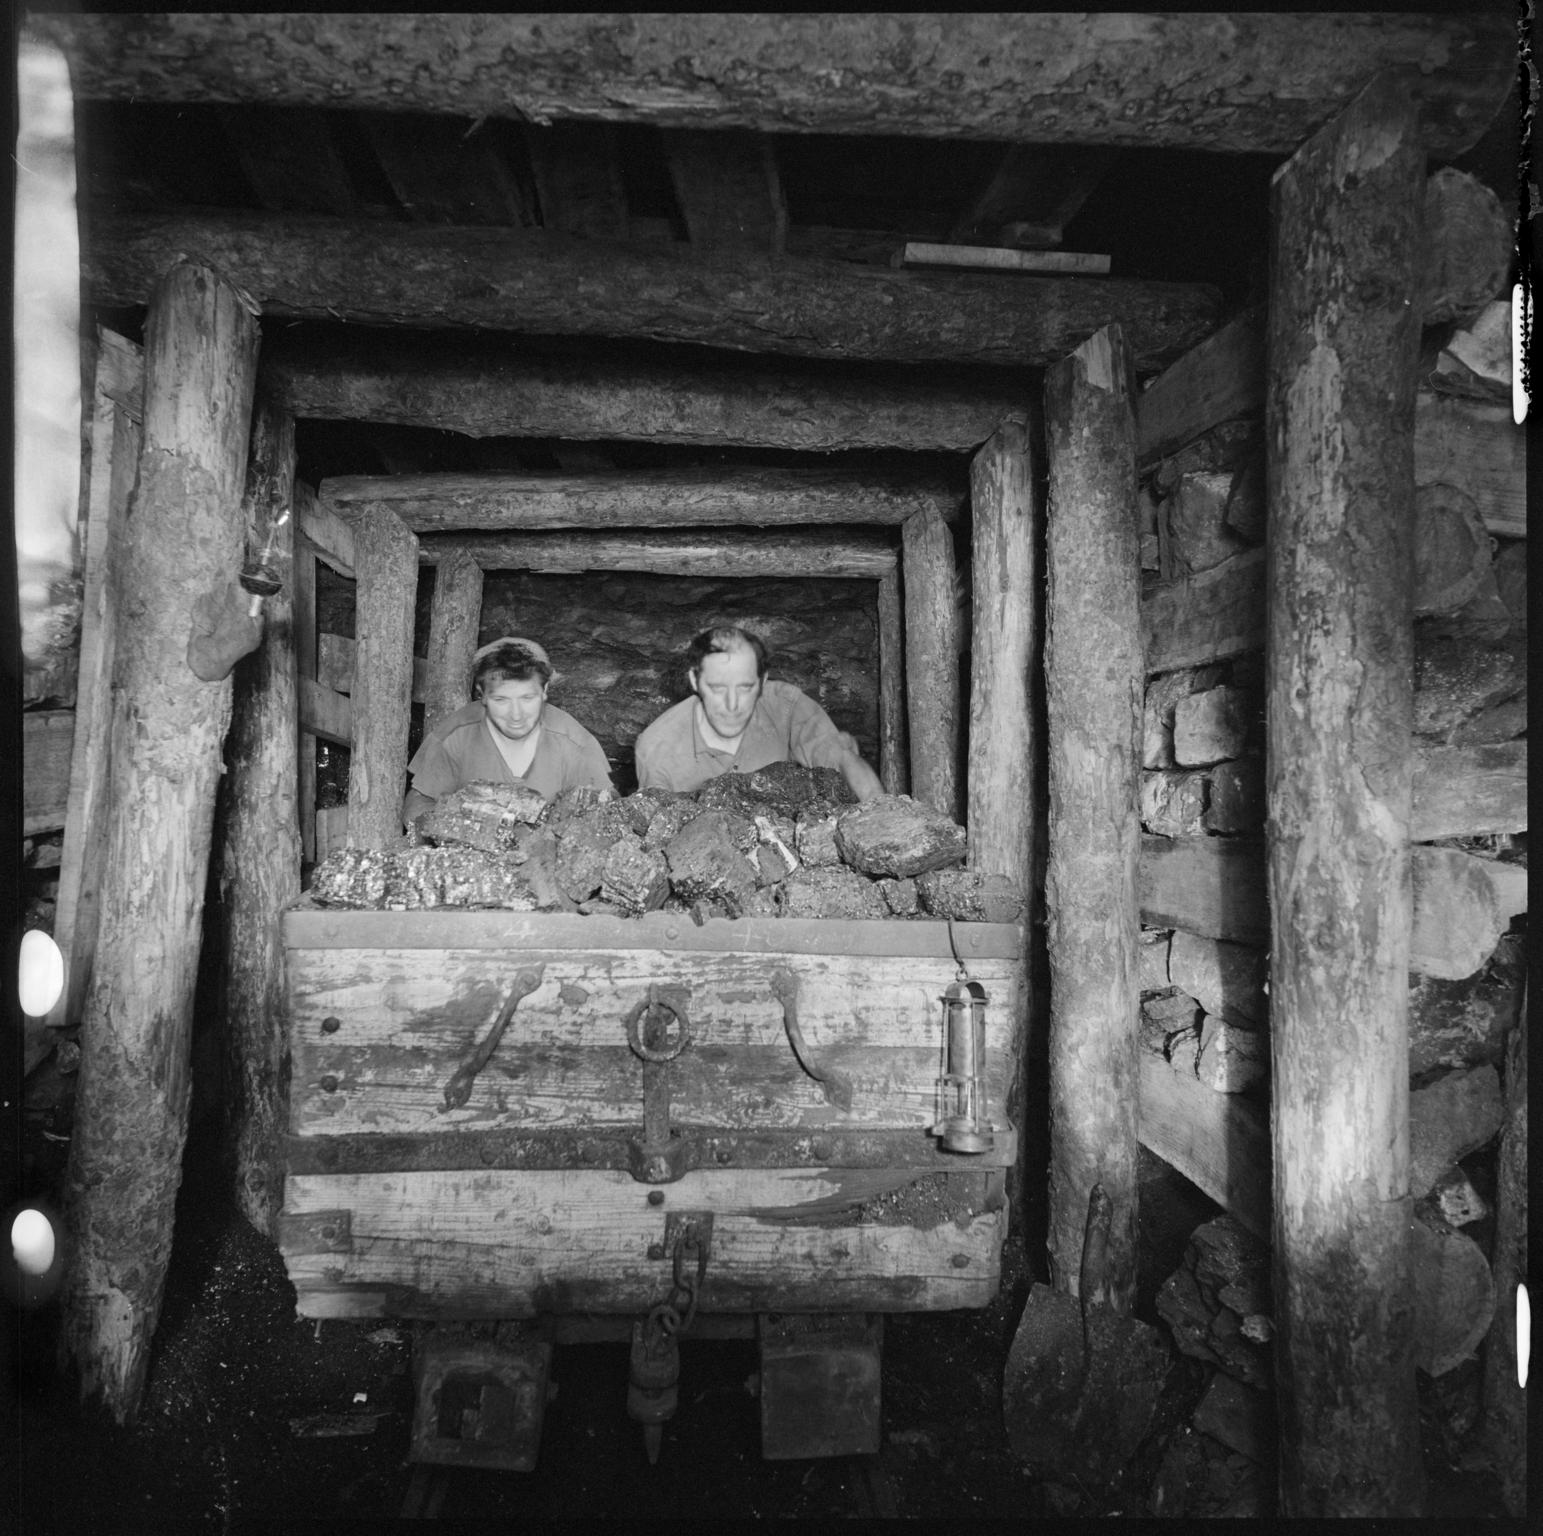 Big Pit Mining Museum, film negative